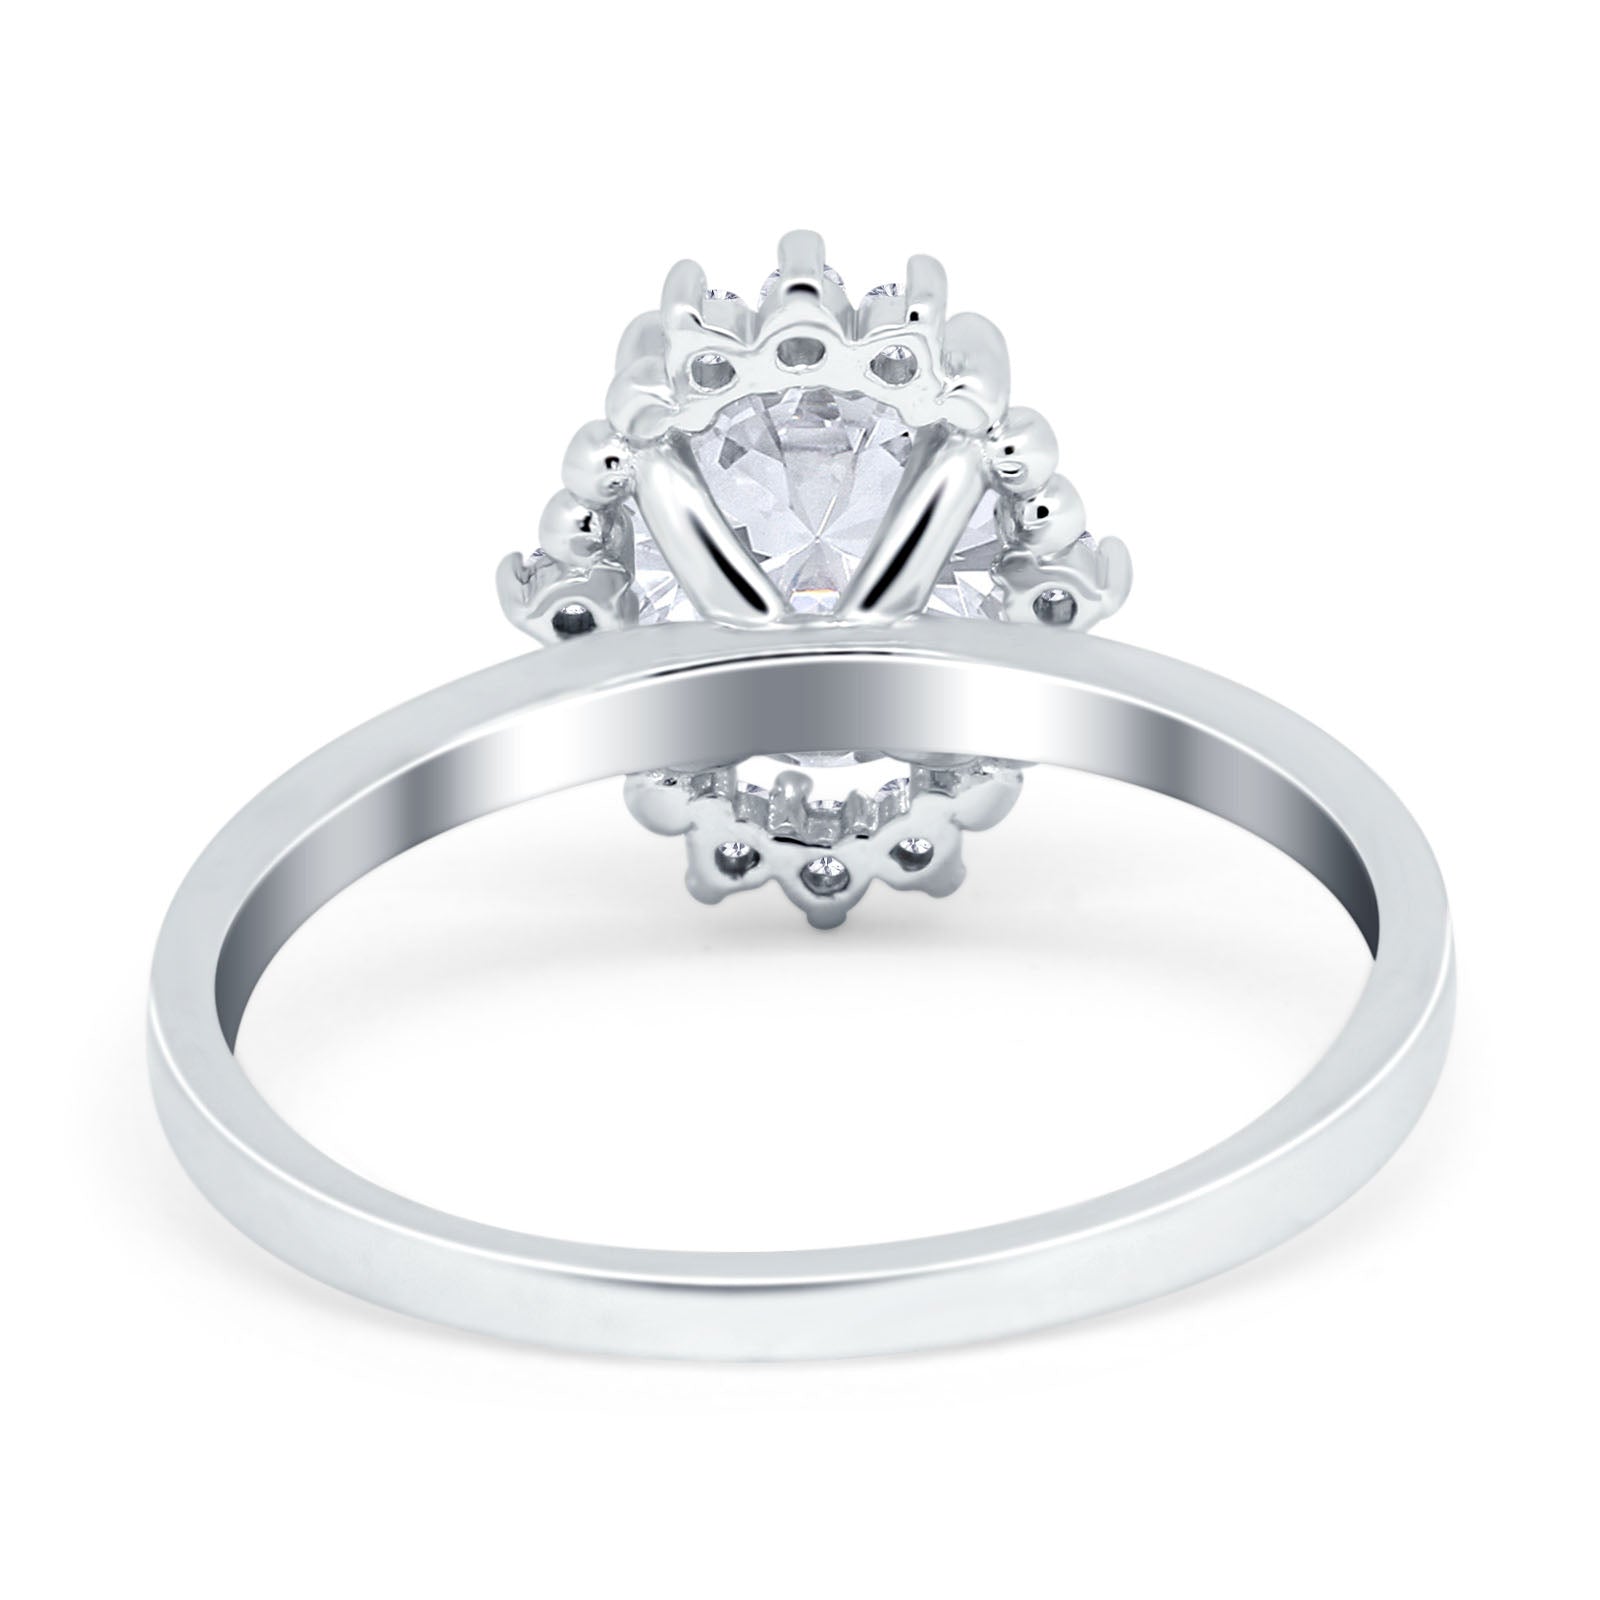 14K Gold Halo Vintage Style Oval Shape Bridal Simulated Cubic Zirconia Wedding Engagement Ring